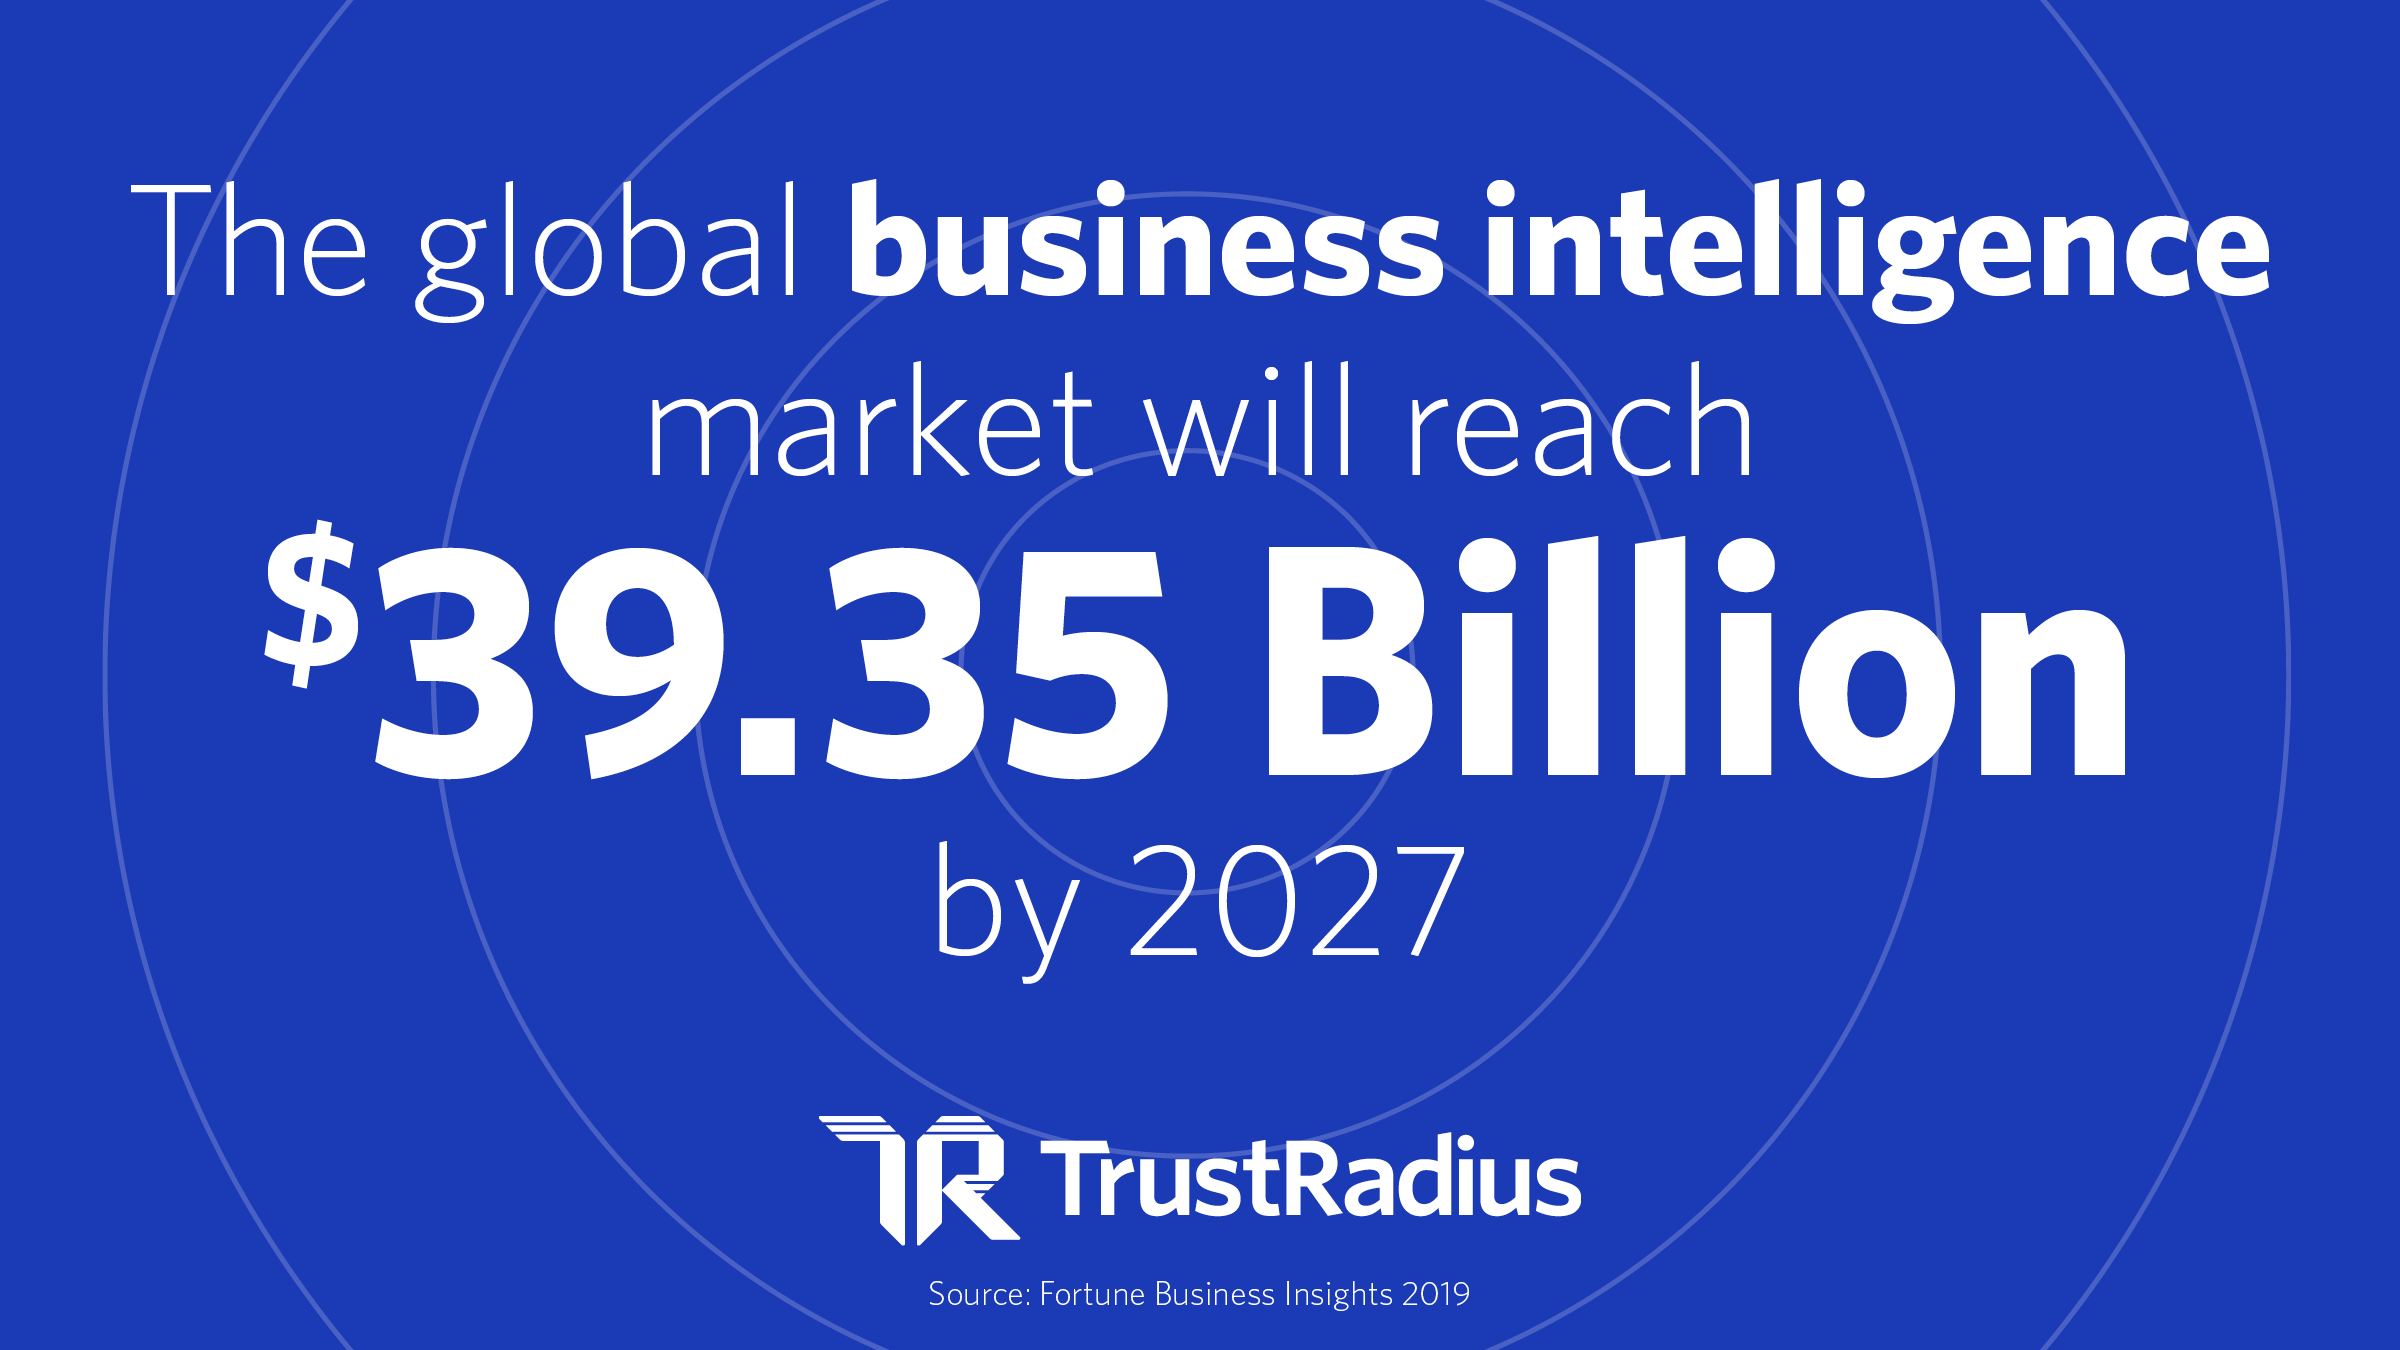 The Global Bi market will reach 39.35 Billion dollars by 2027